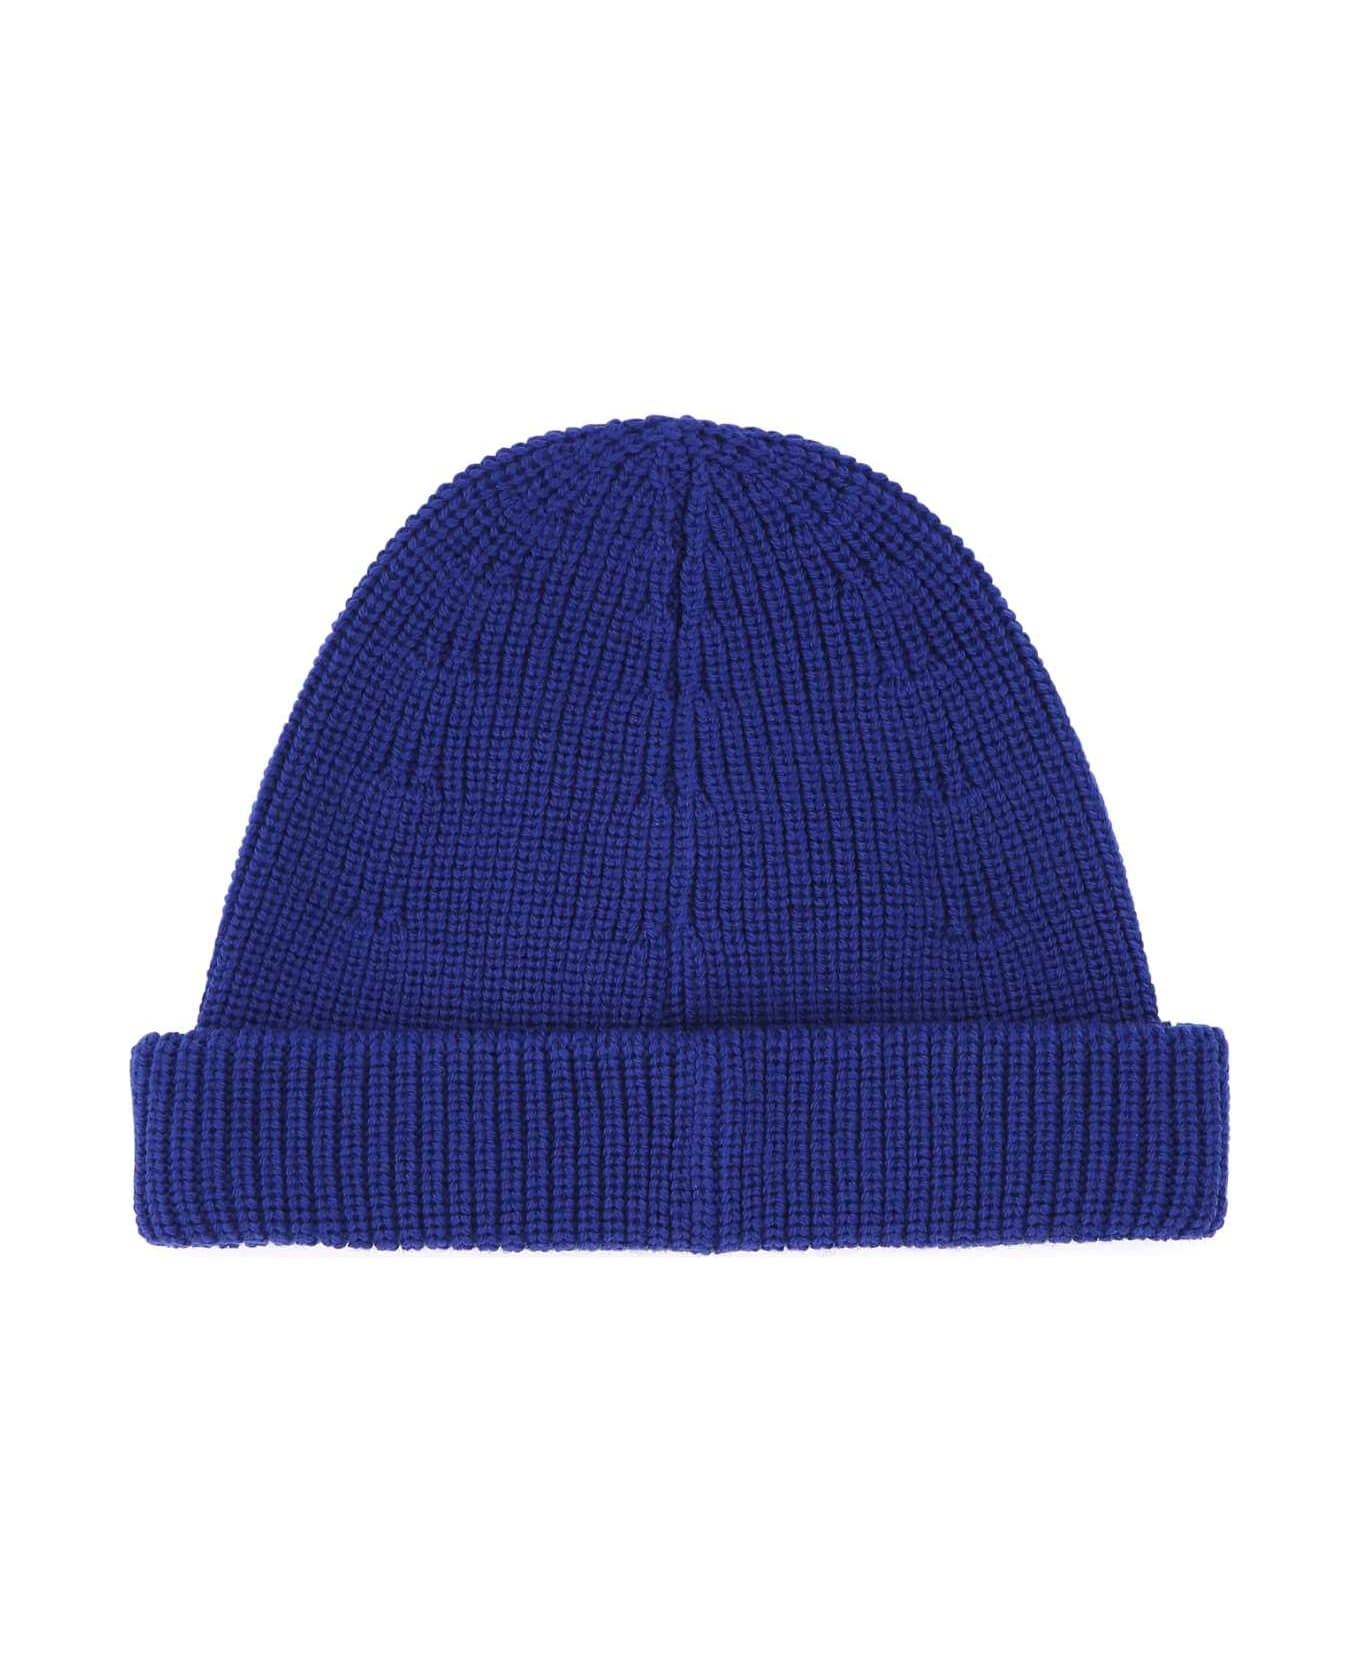 VETEMENTS Blue Wool Beanie Hat - ROYALBLUE